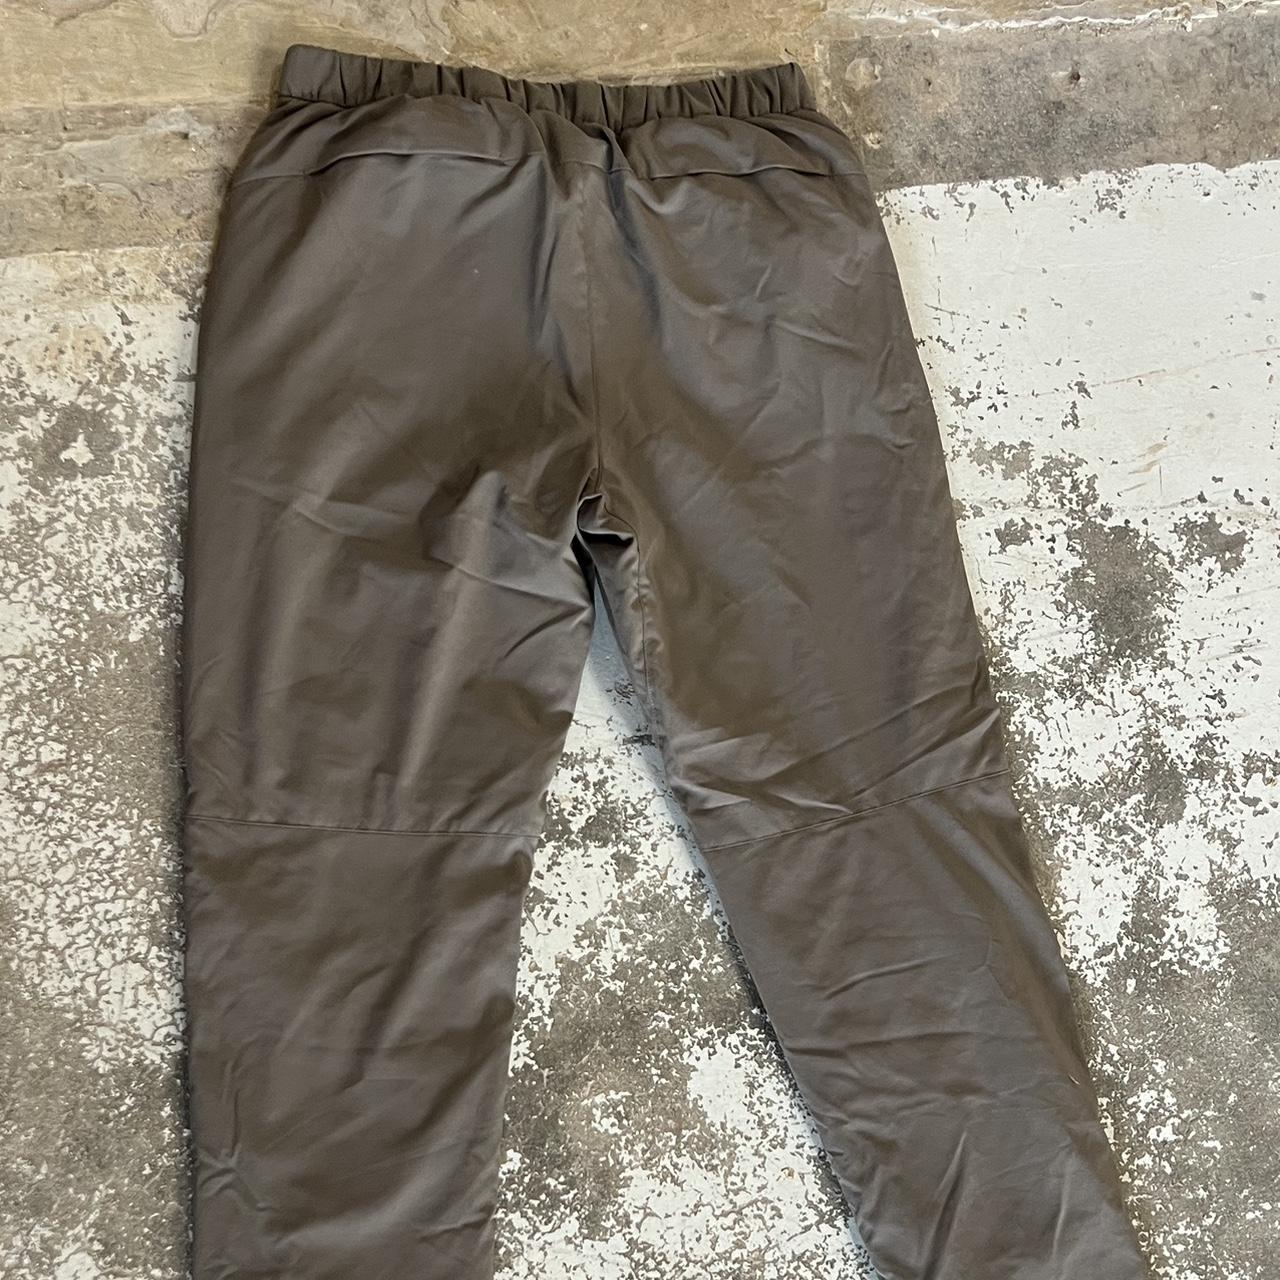 Uniqlo HeatTech Pants Brown, warm, elastic - Depop